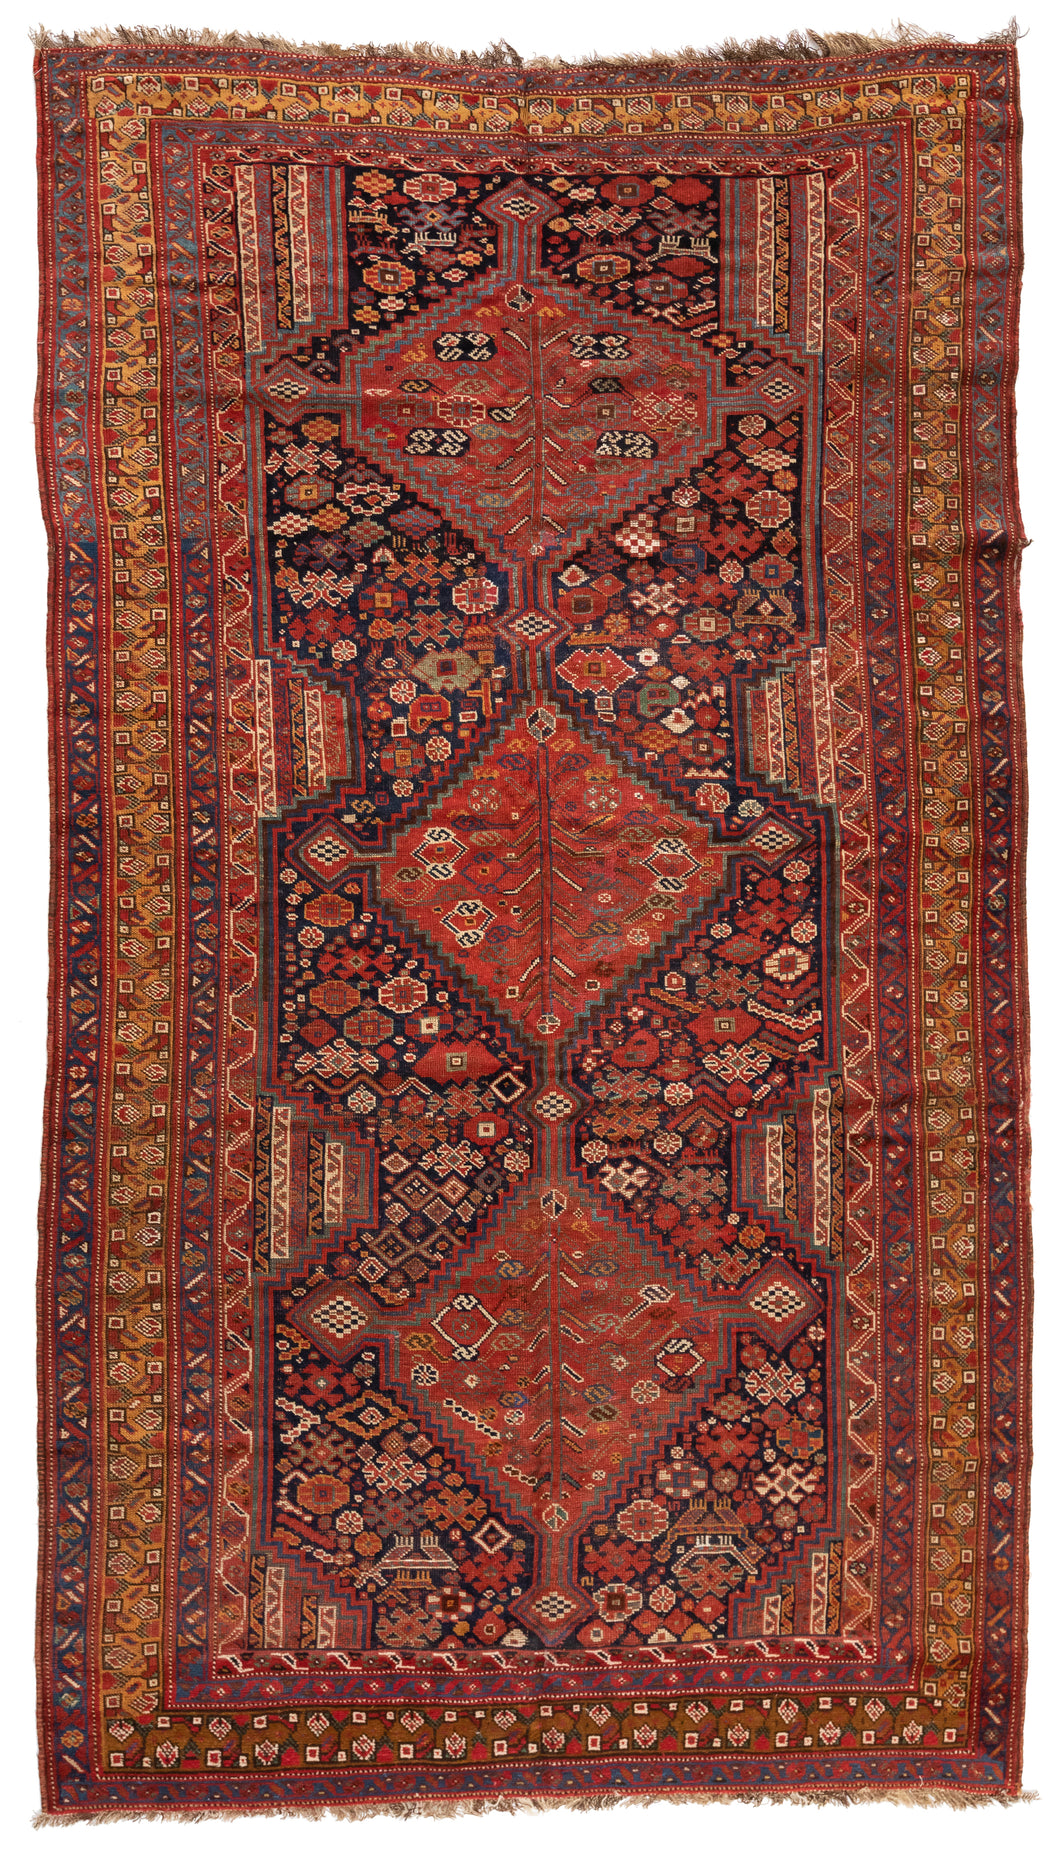 Antique Khamseh Carpet